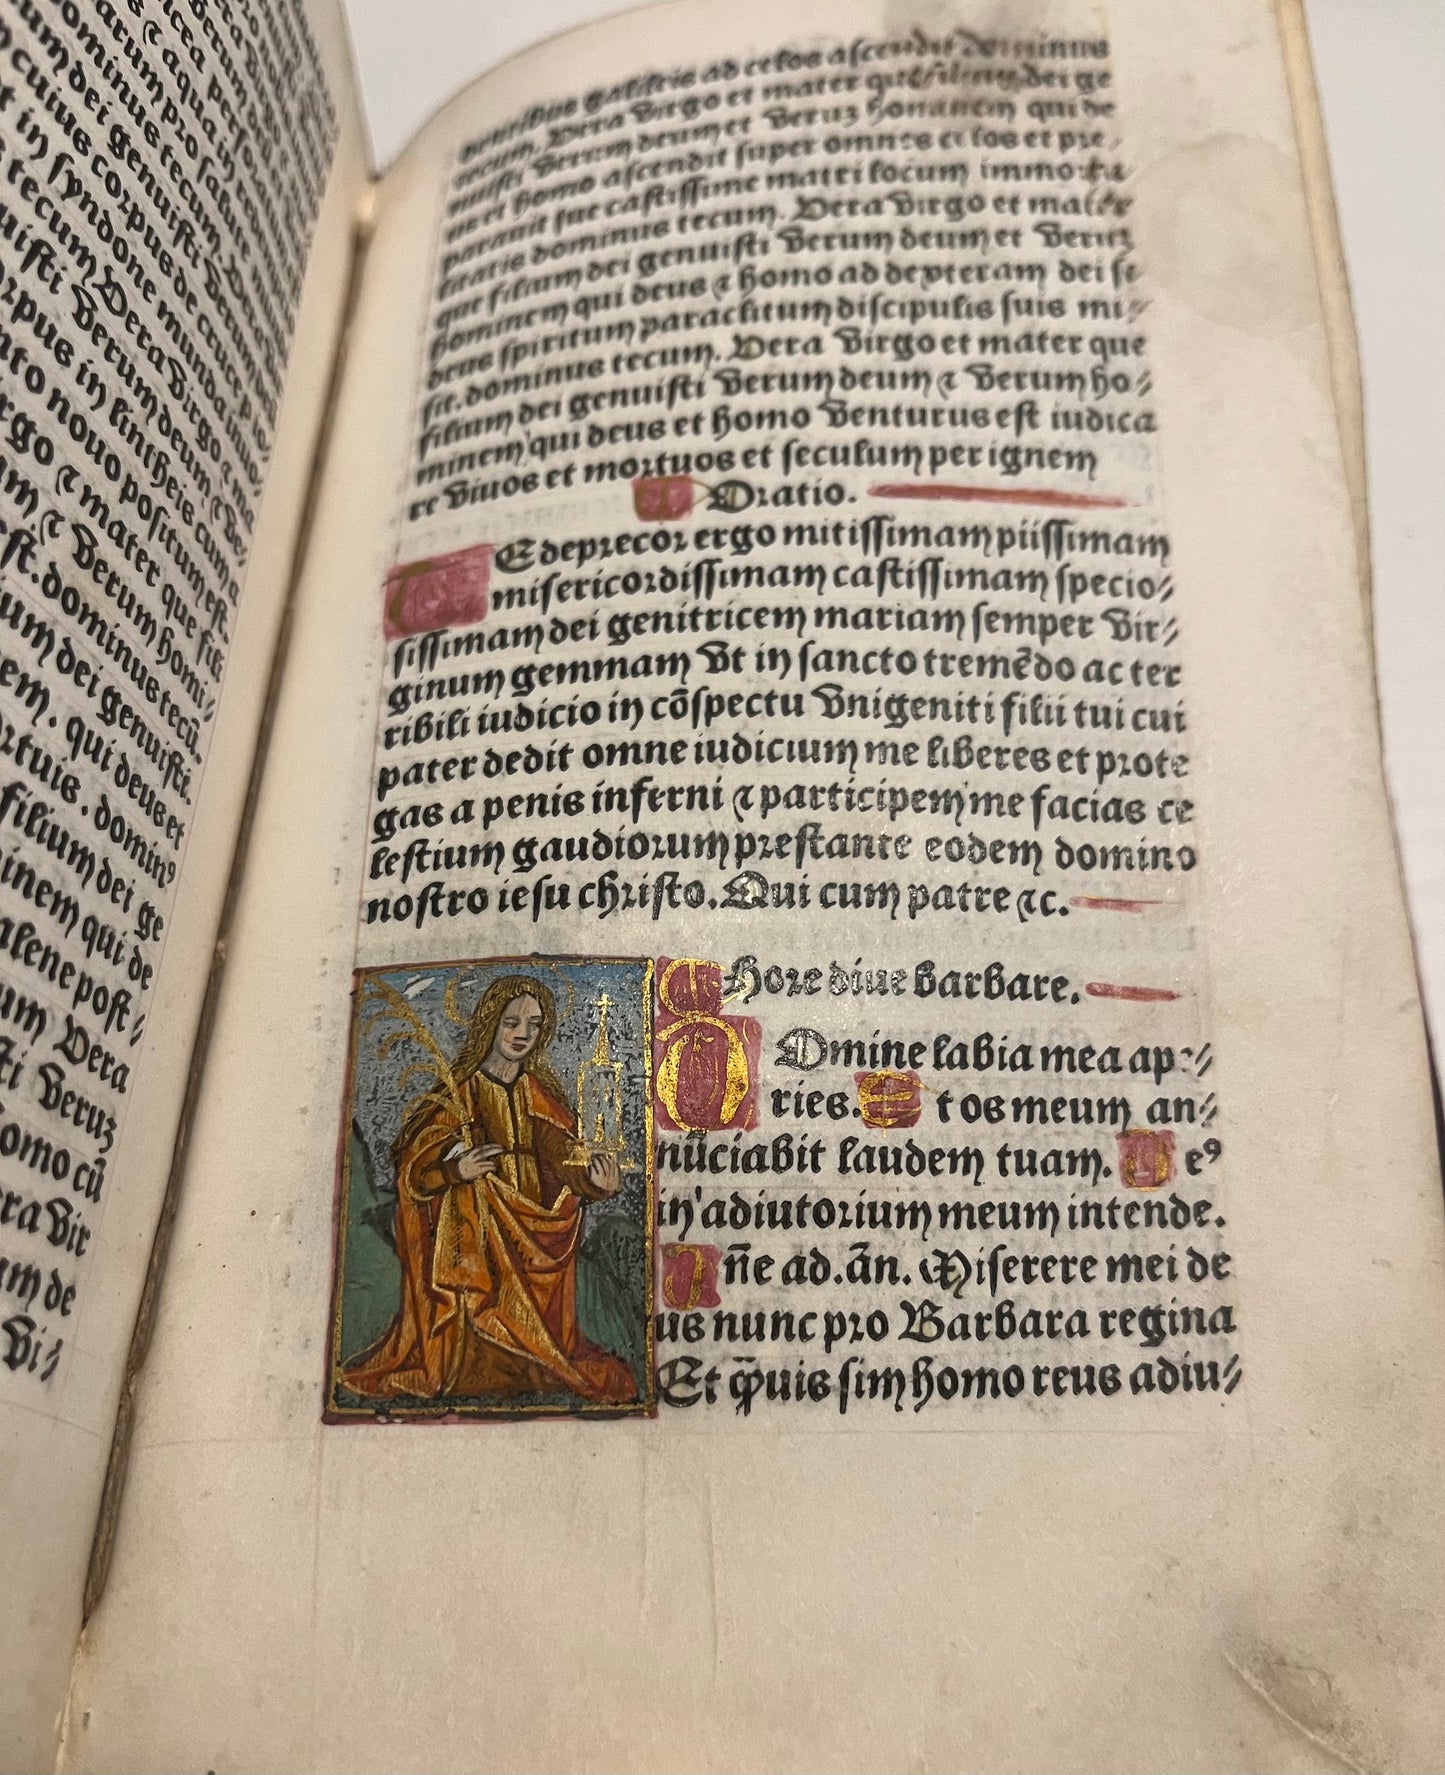 Post-Incunable ILLUMINATED Book of Hours - Heures a l'usaige de Rome - Paris, Anthoine Chappiel pour Gilles Hardouyn, 1504